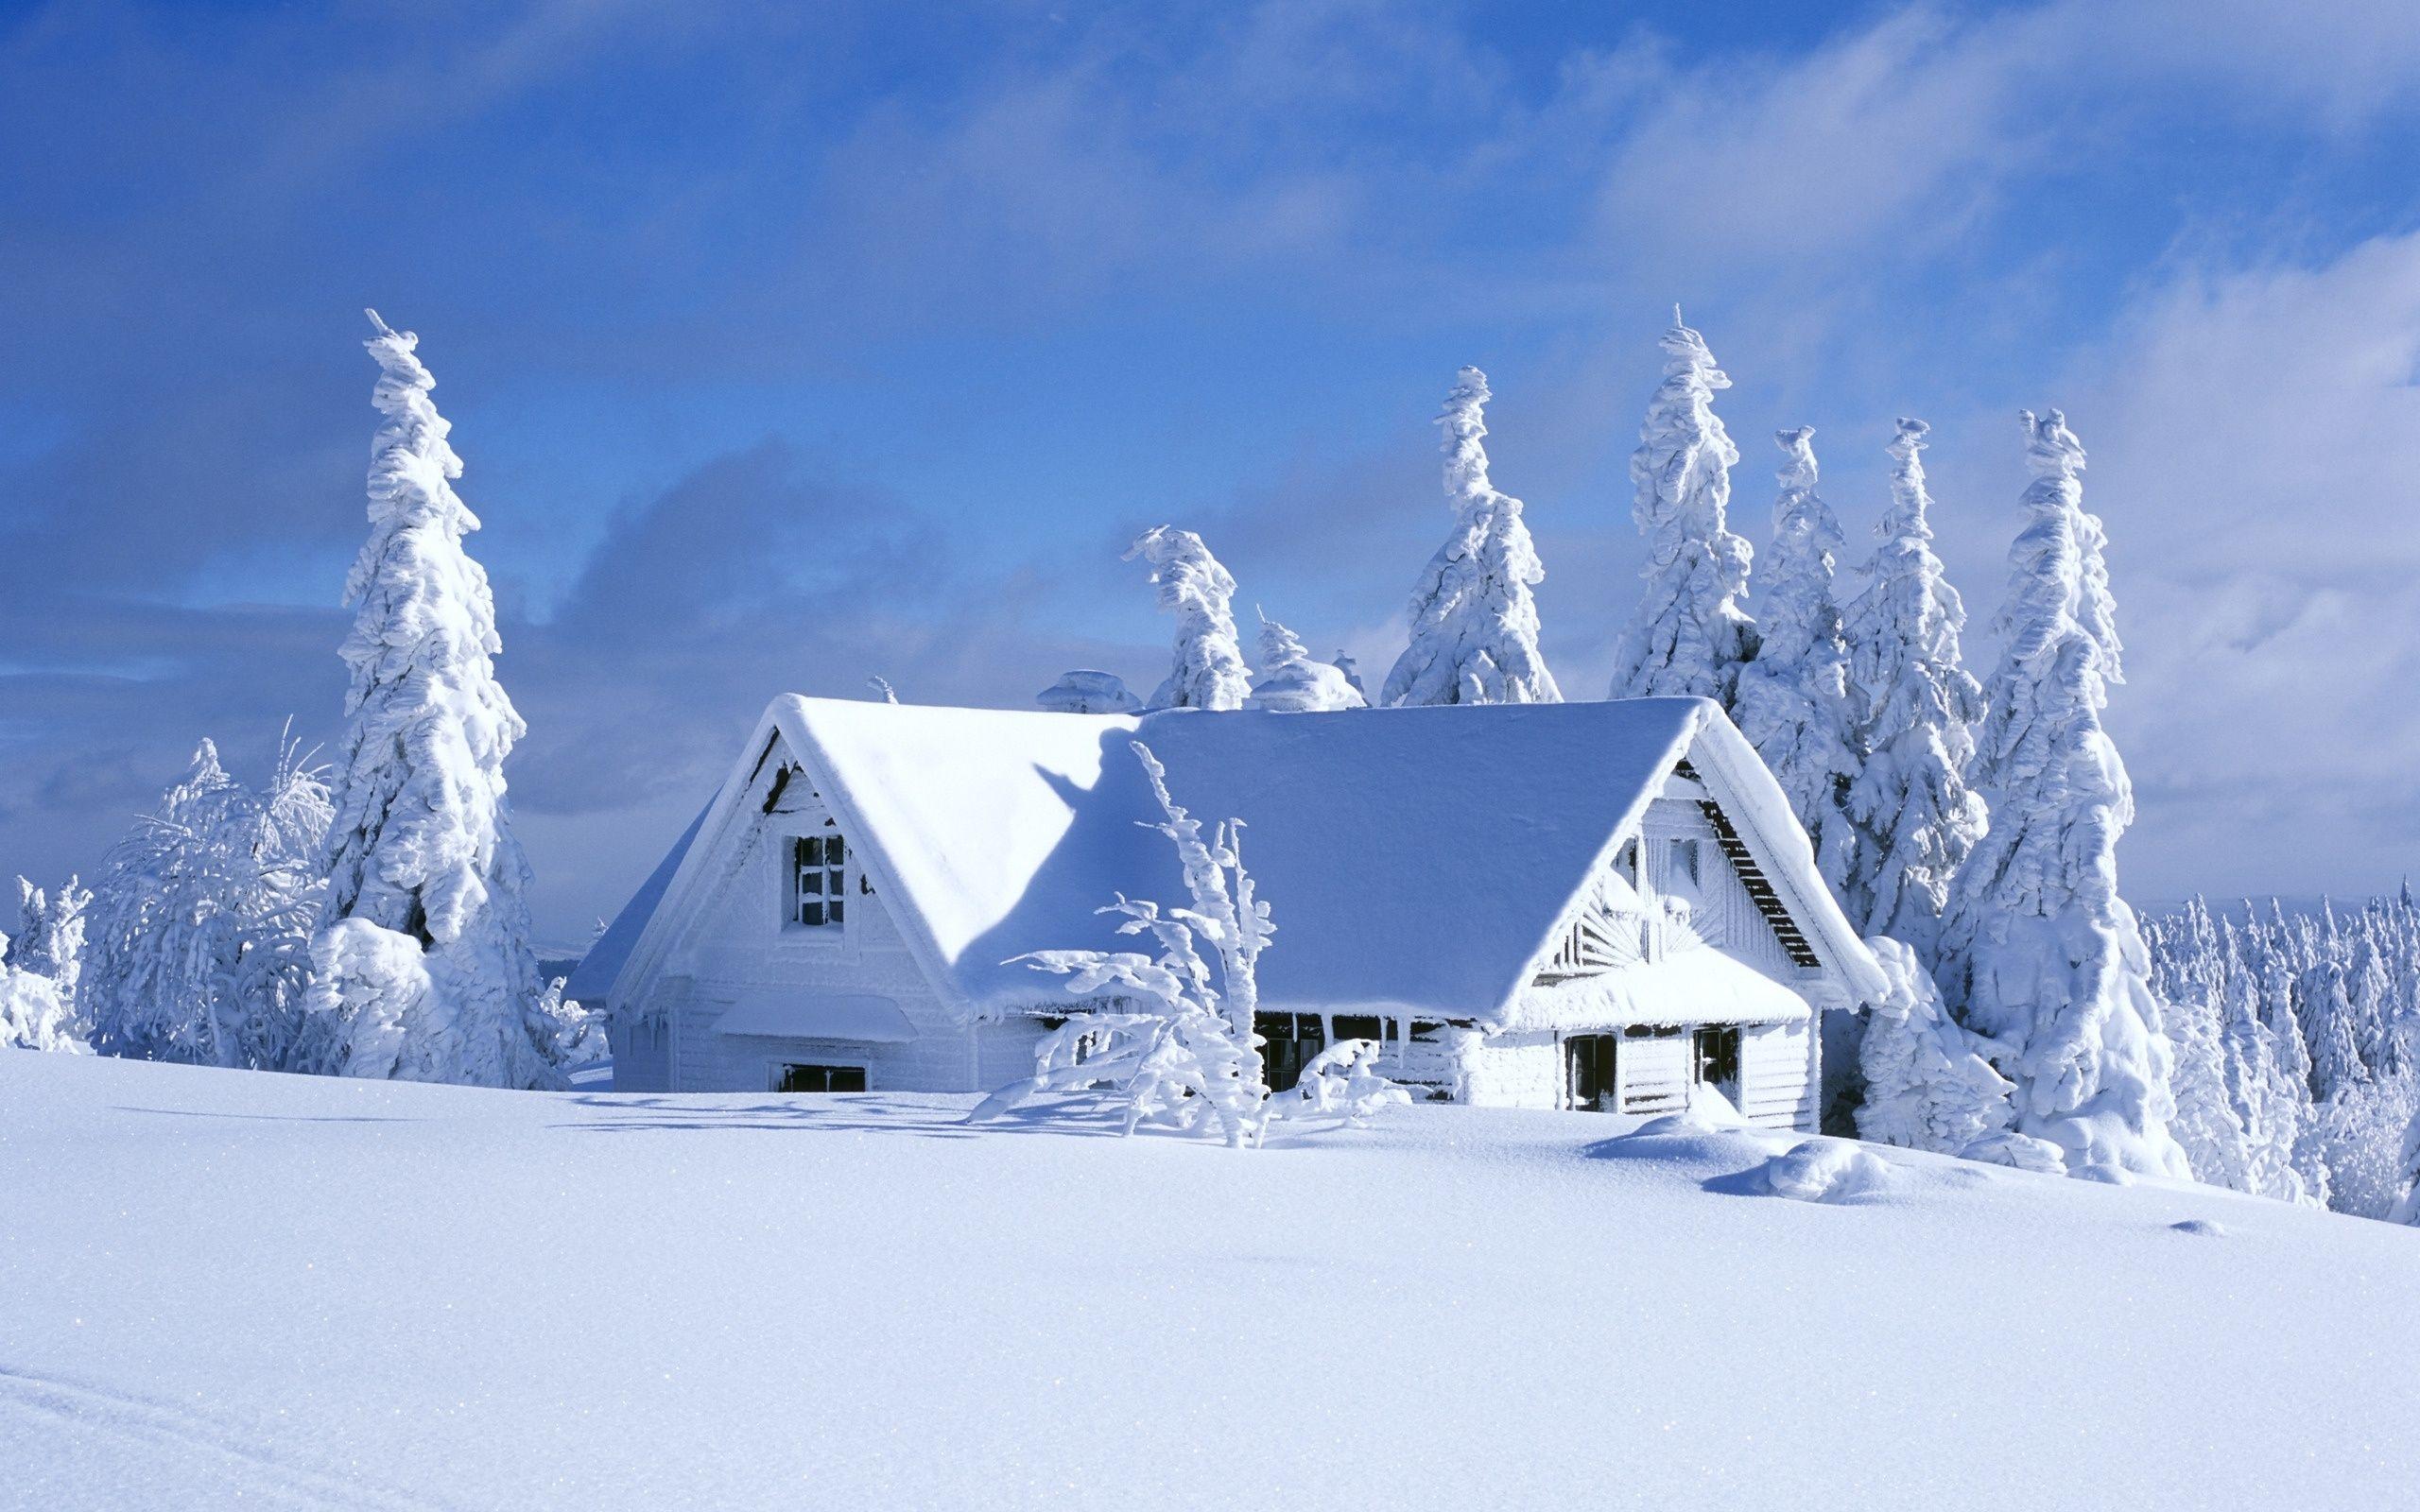 Snow Desktop Wallpaper, Snow Image Free. Winter snow wallpaper, Winter wallpaper, Winter house